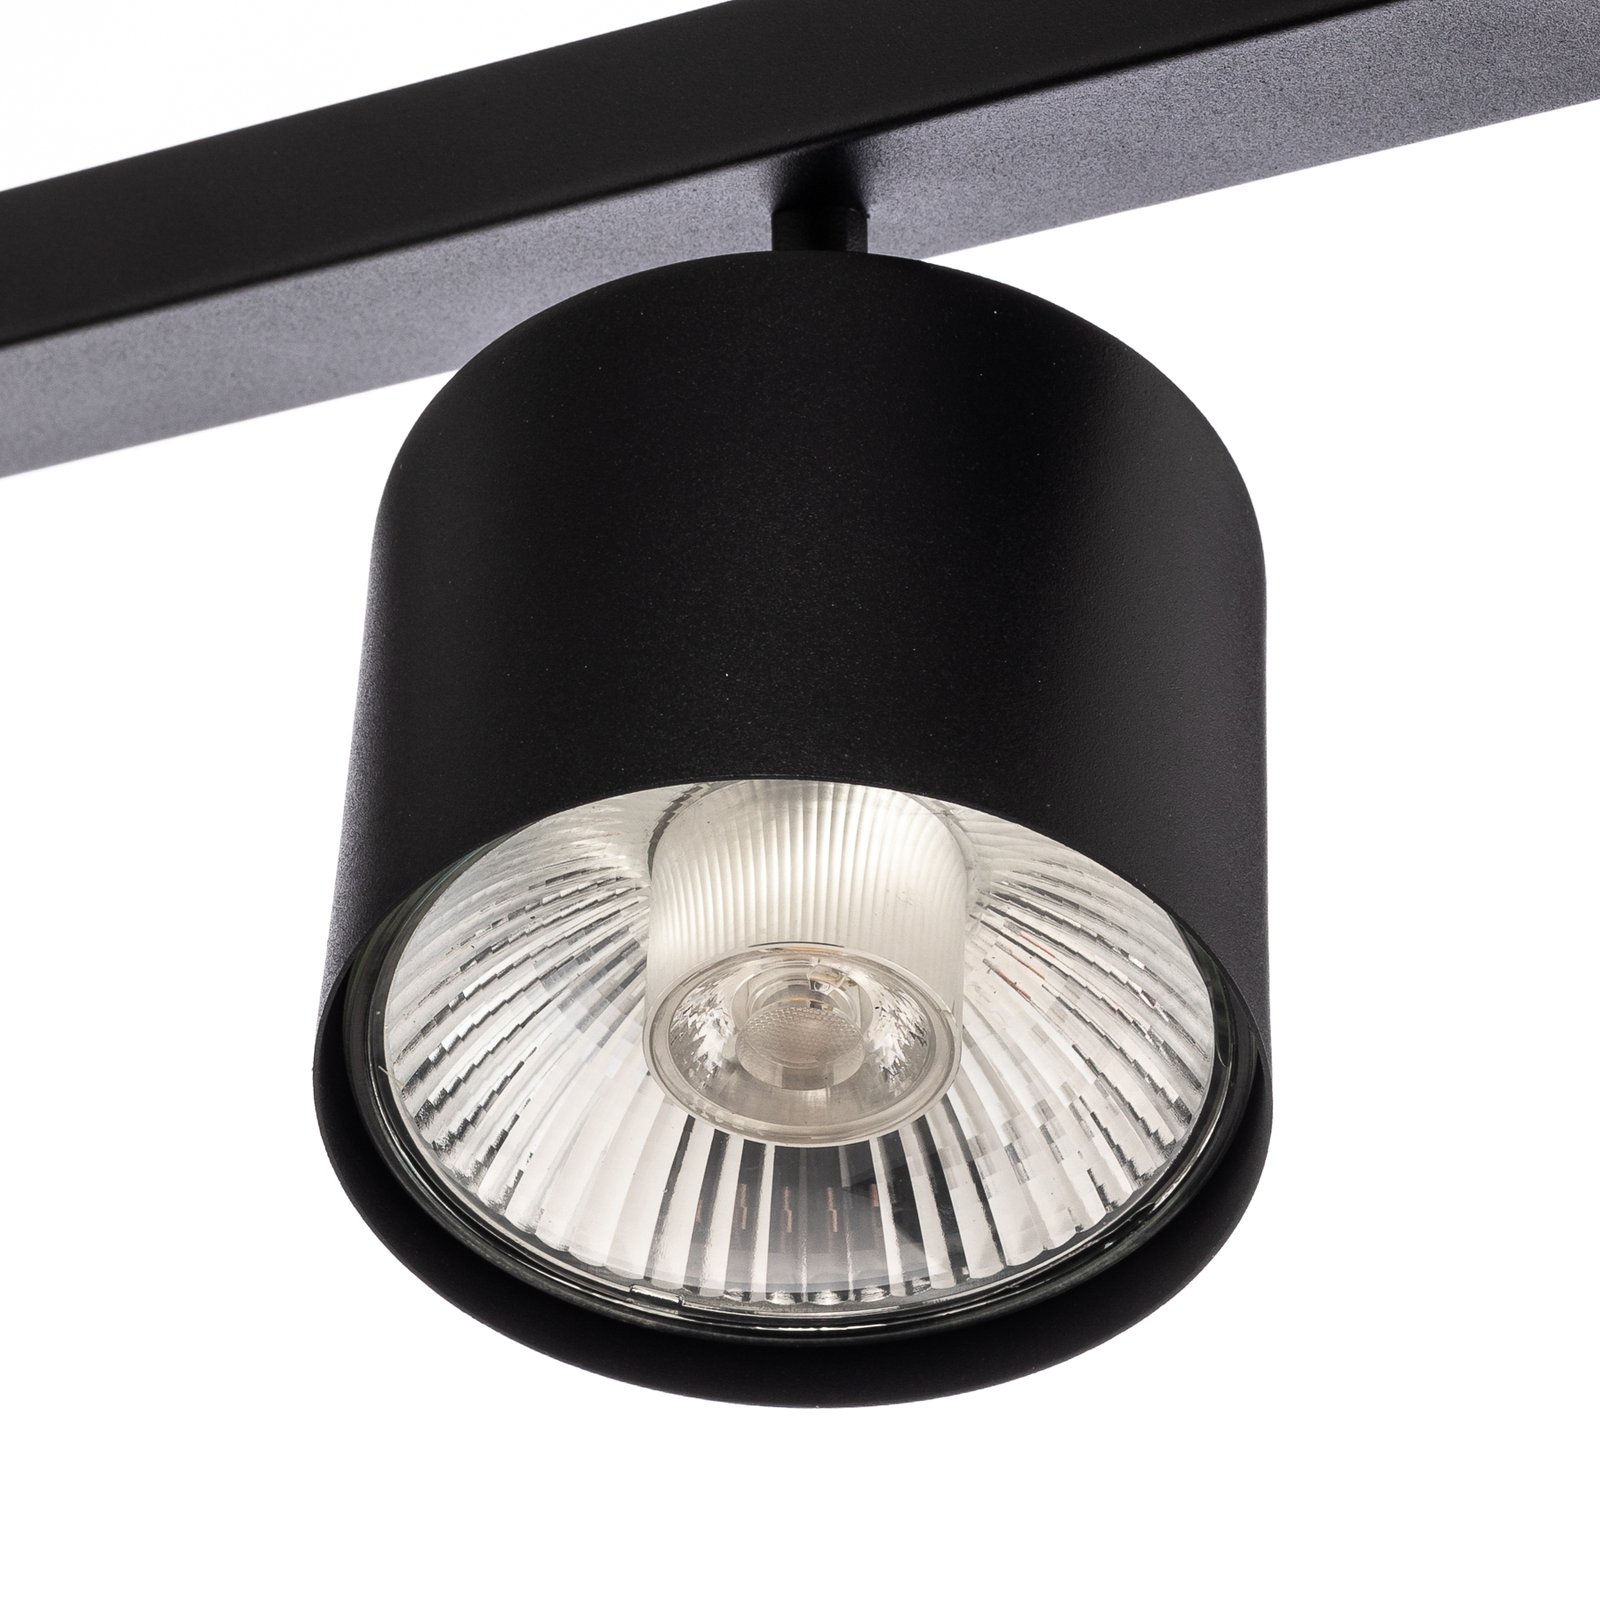 1047 ceiling light, three-bulb, black